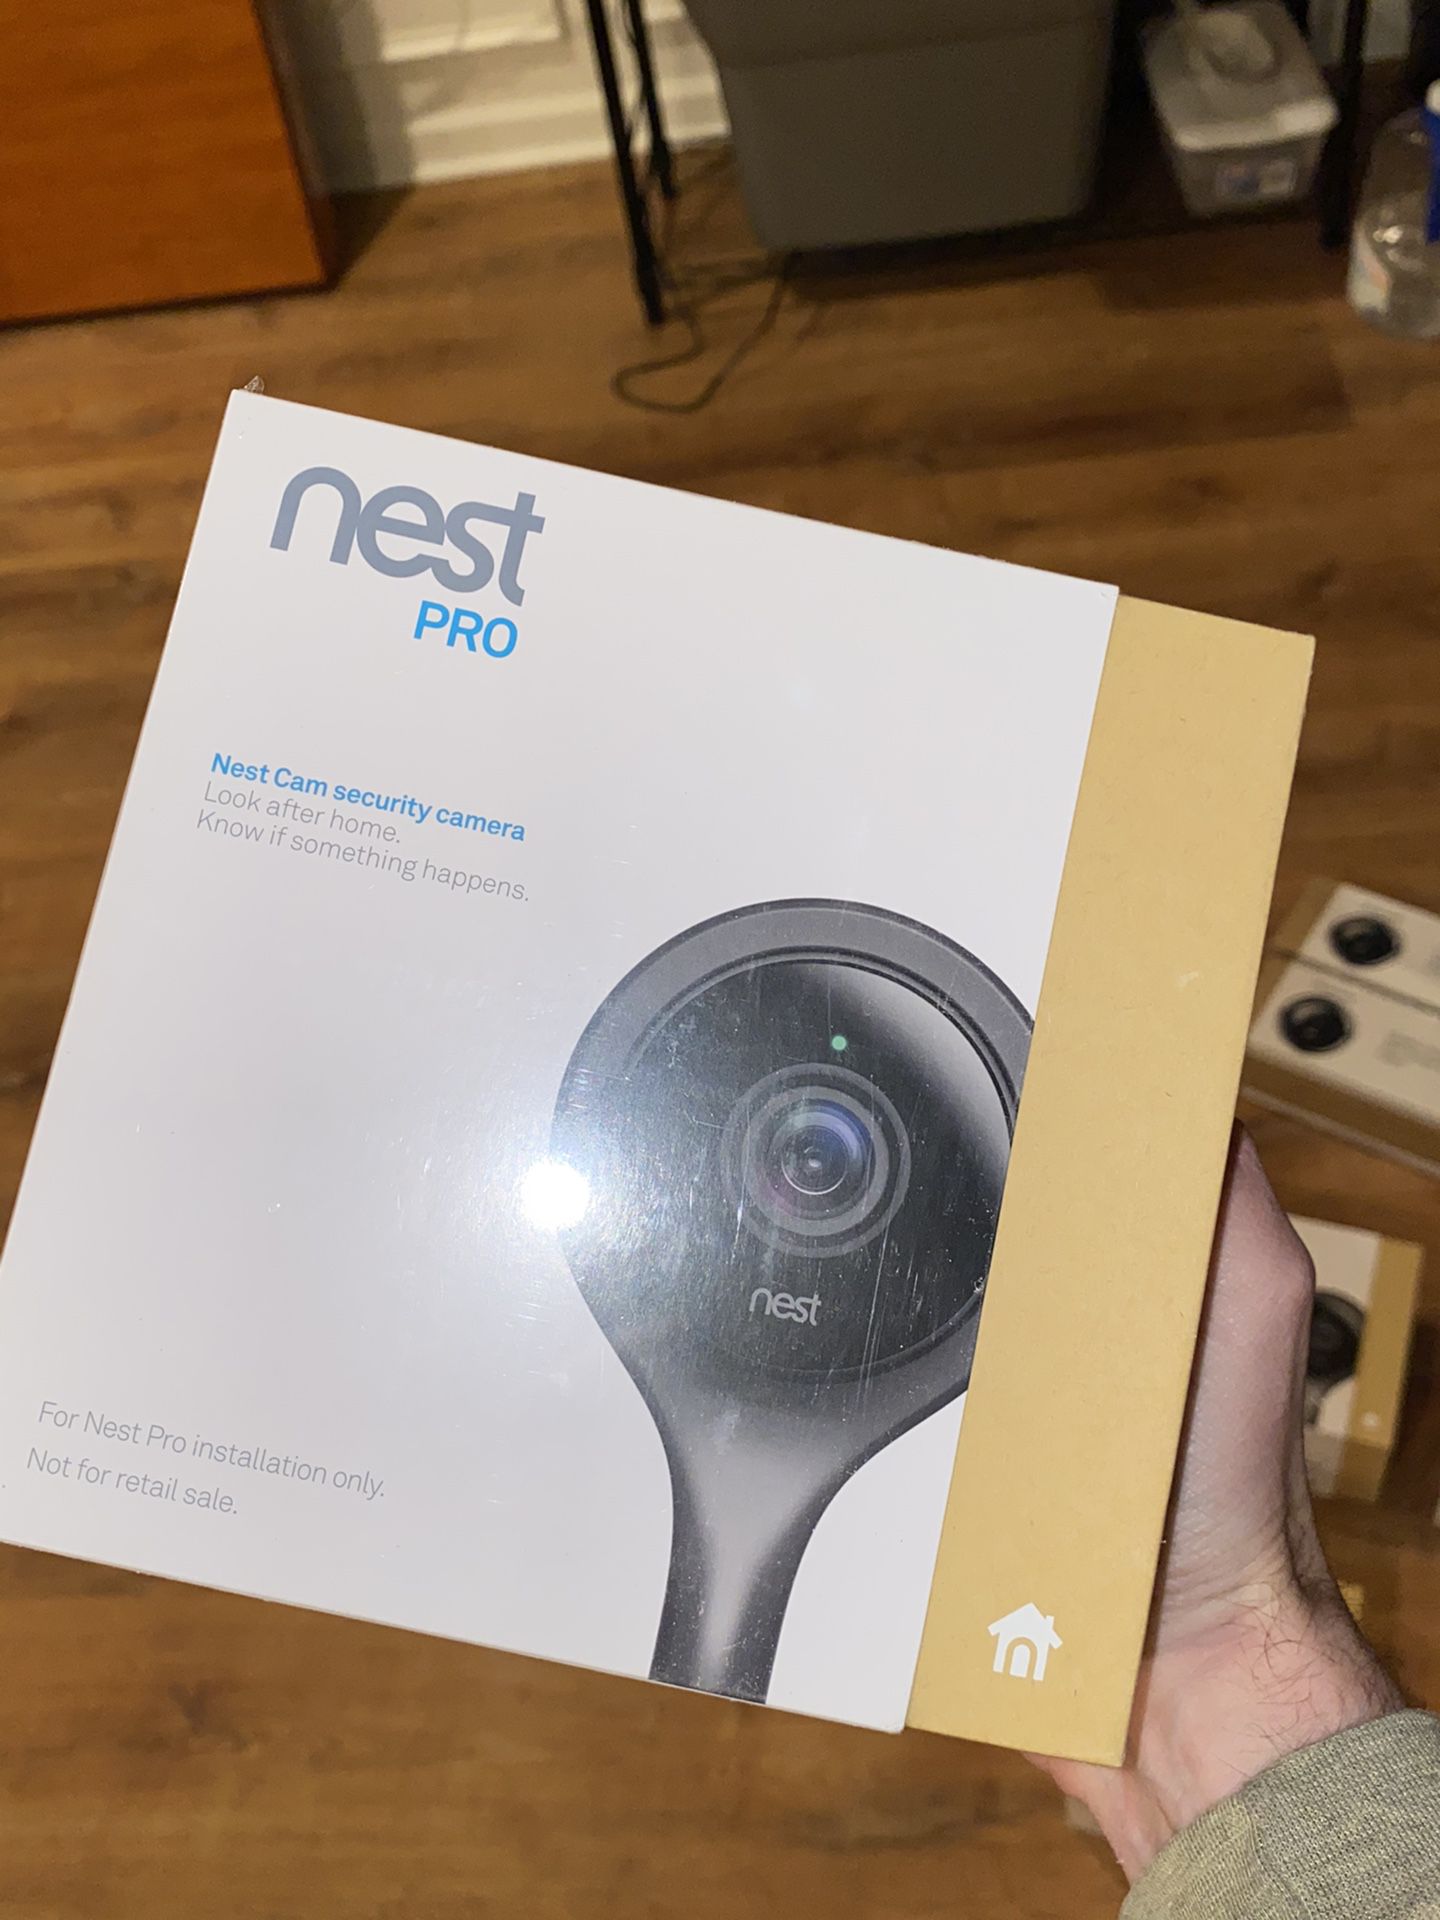 Nest pro nest cam security camera $180